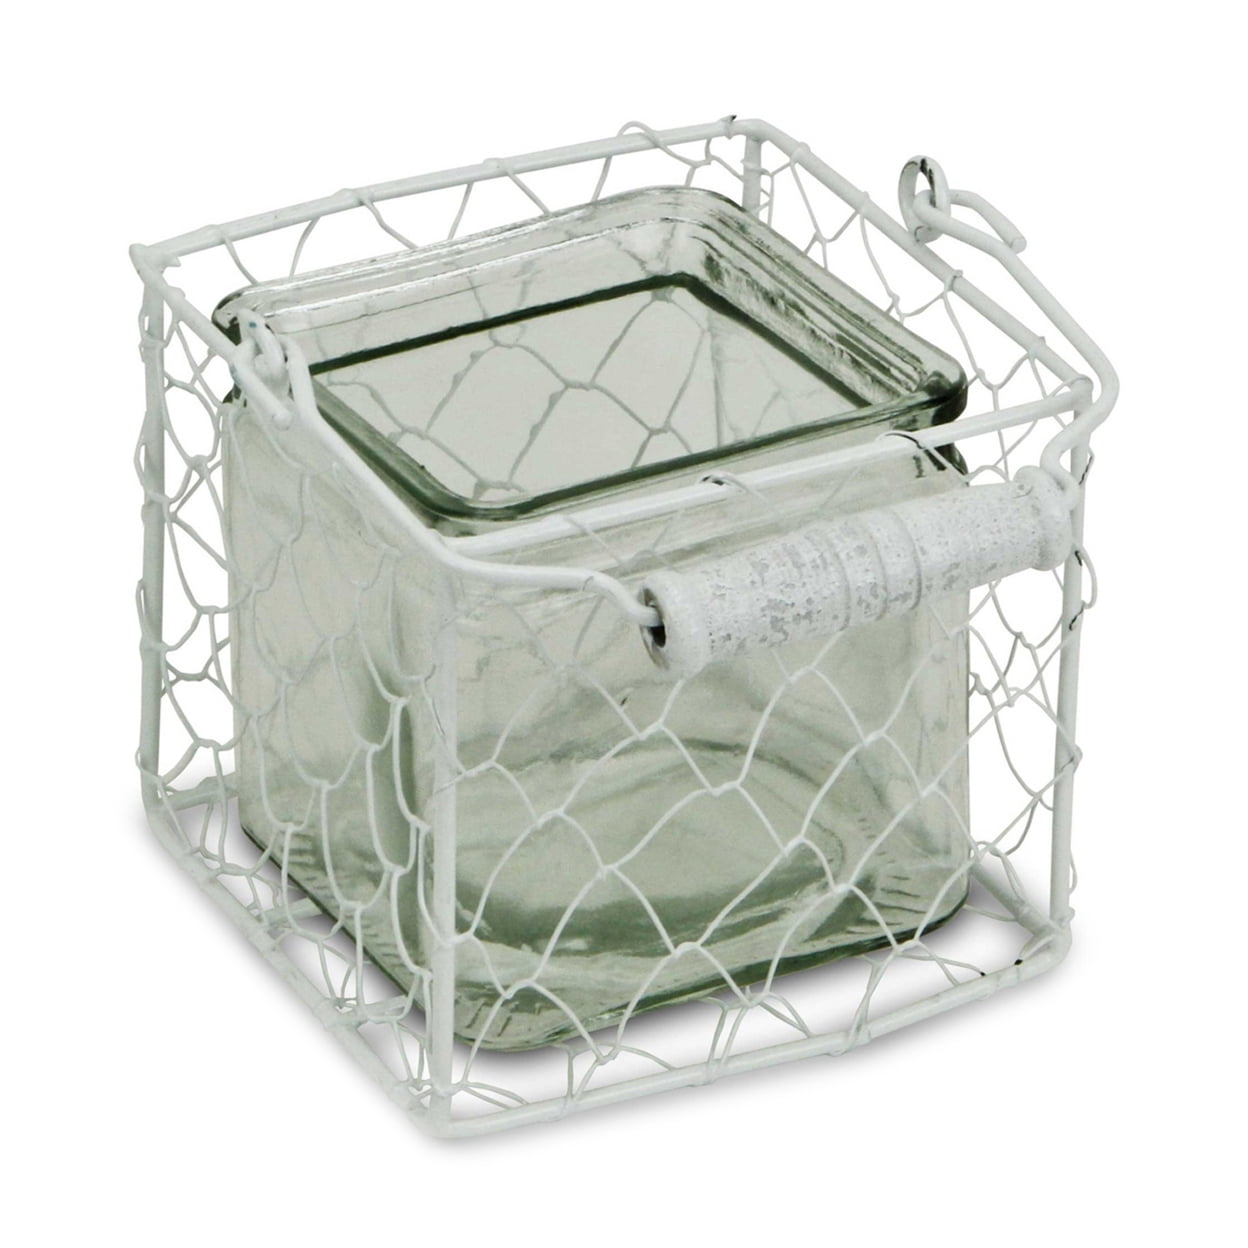 15s002wm Square Glass Jar In Wire Basket, White - Medium